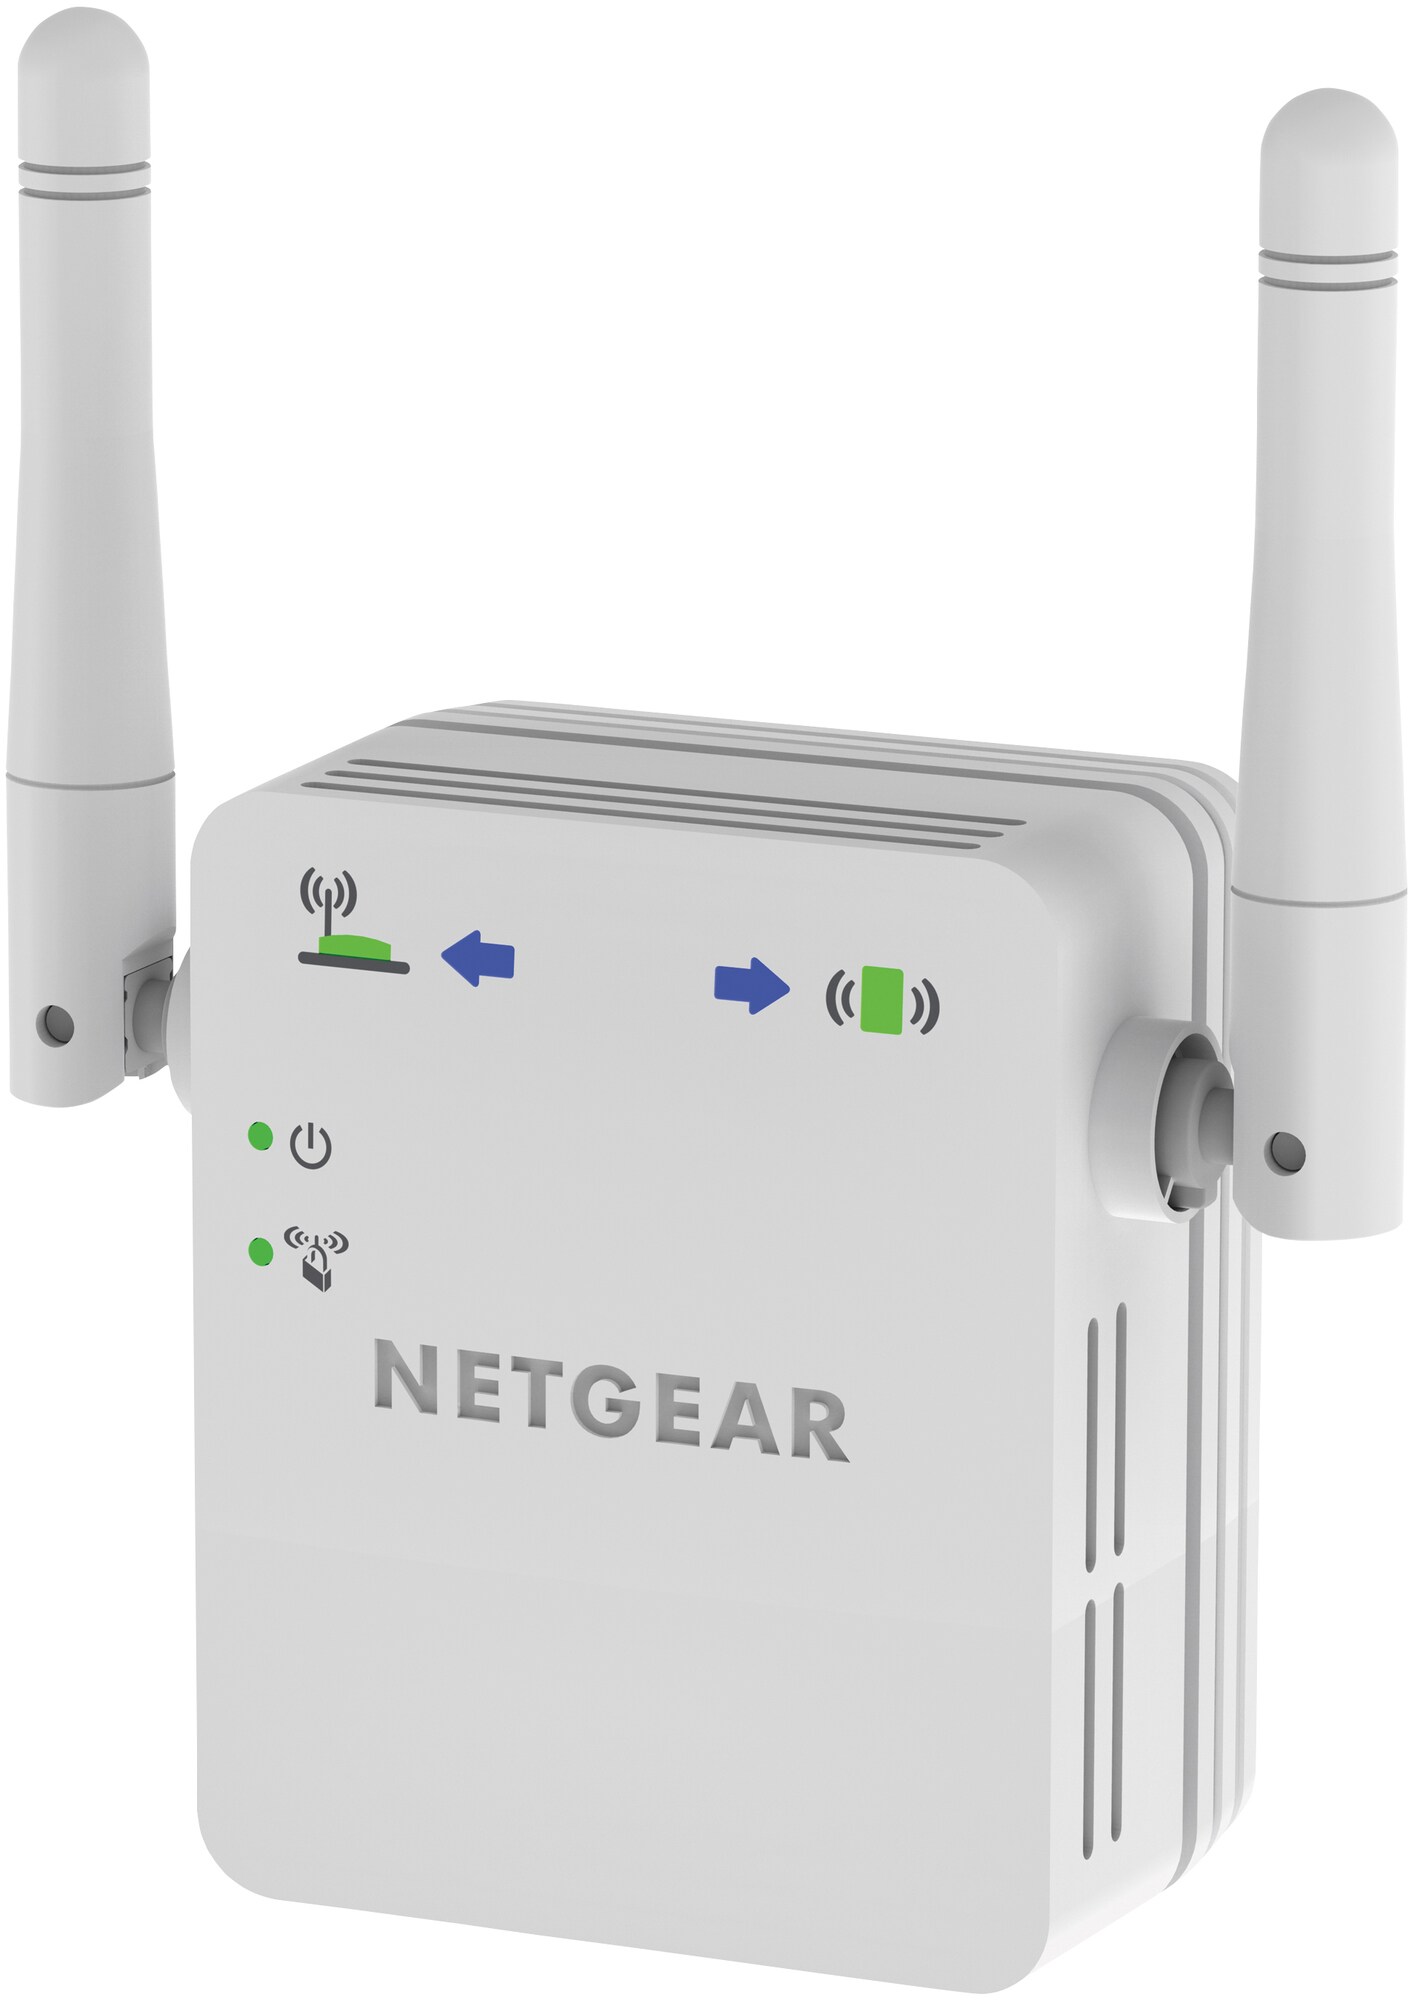 Netgear WN3000 wi-fi range |